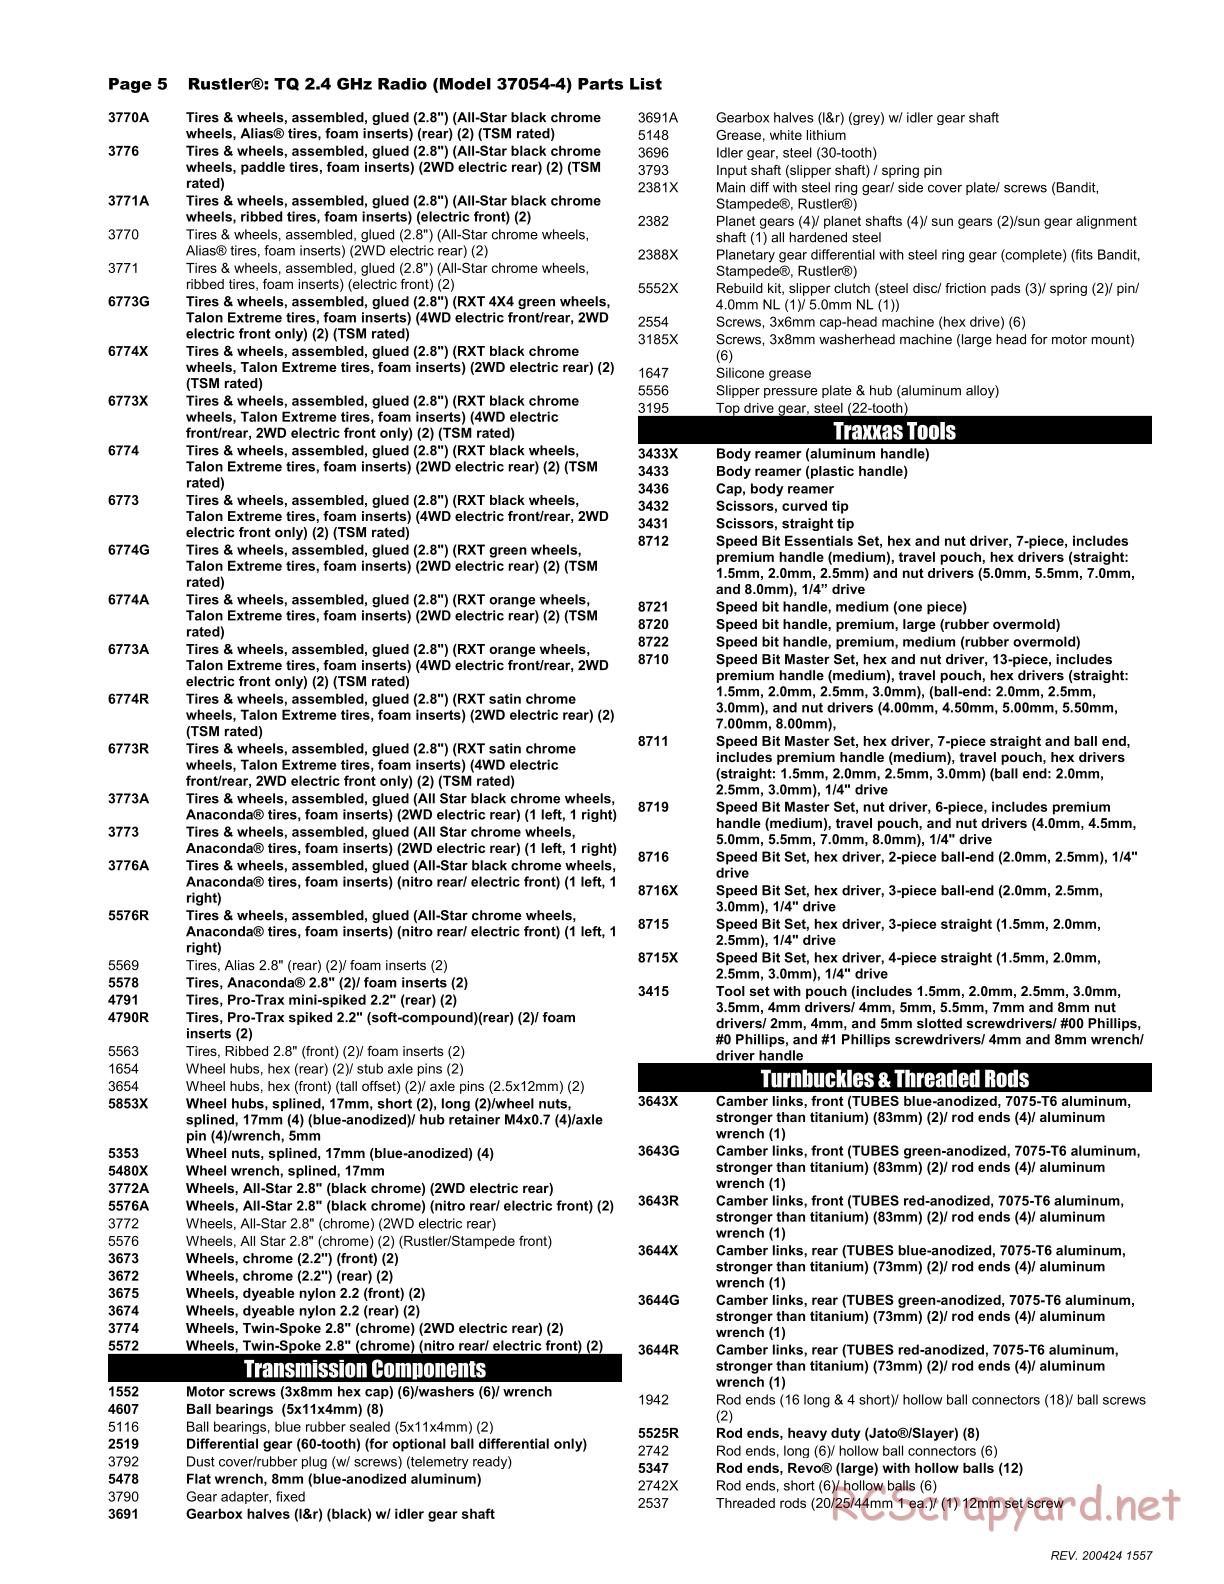 Traxxas - Rustler XL-5 (2018) - Parts List - Page 5